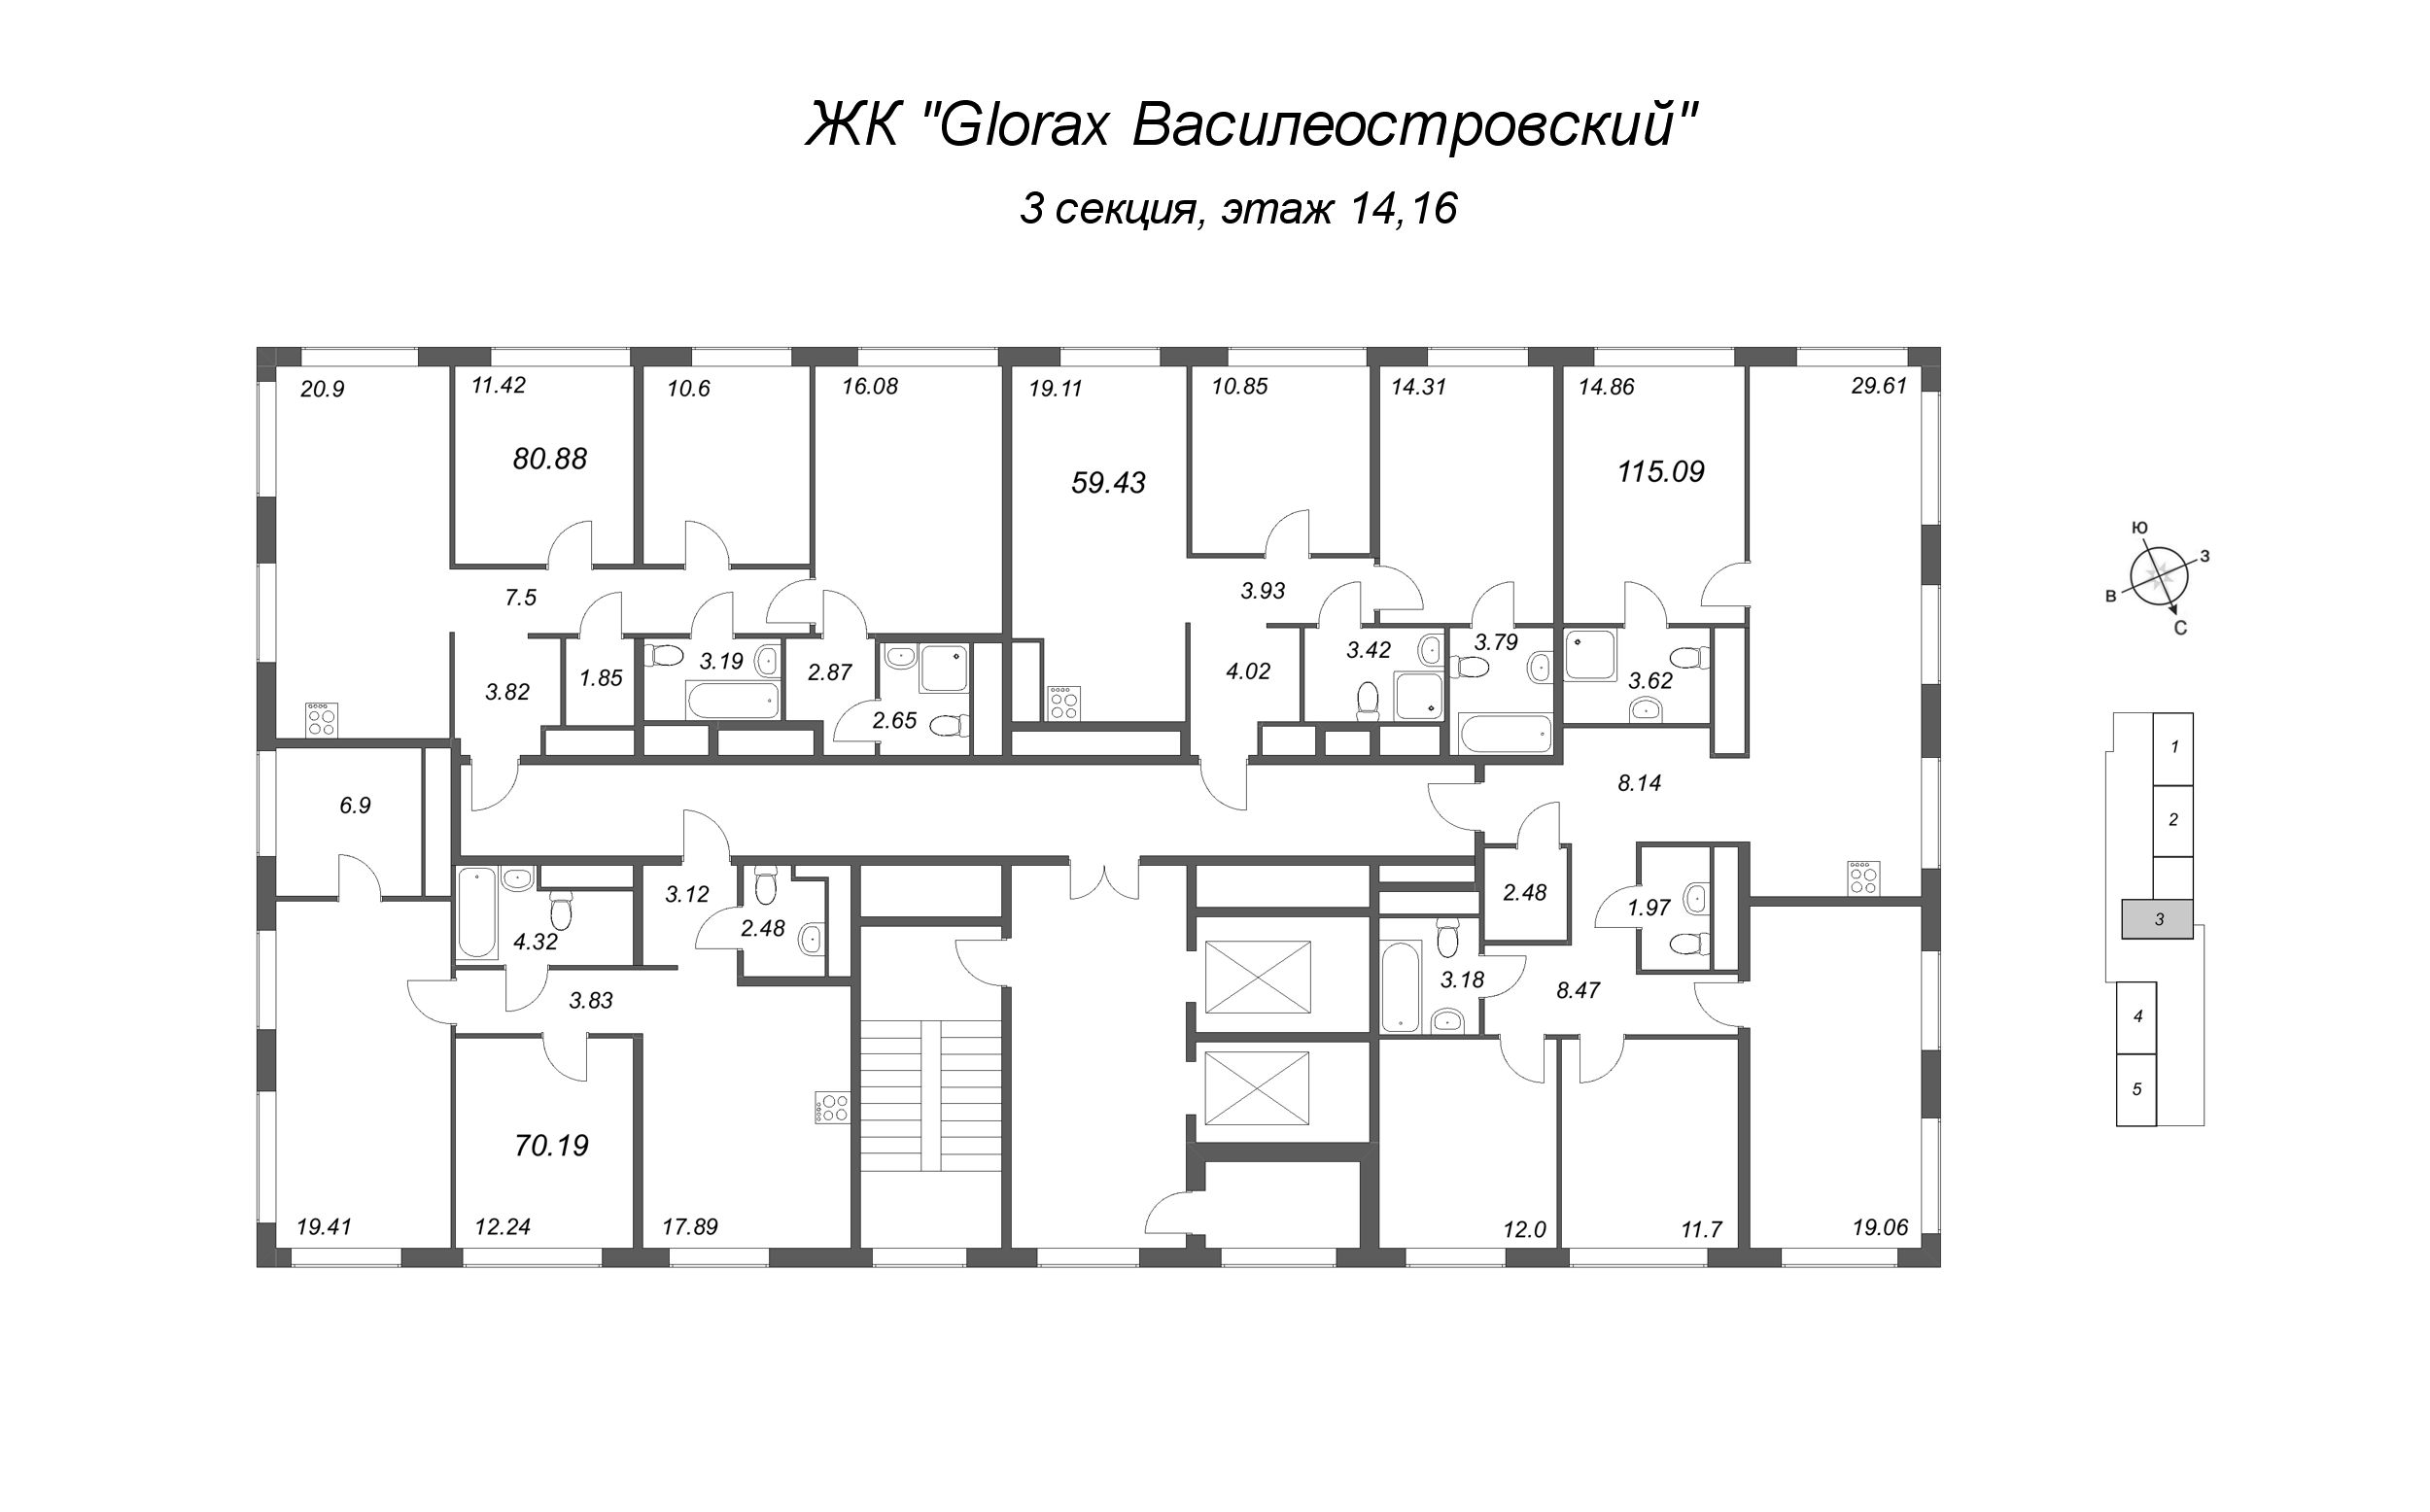 5-комнатная (Евро) квартира, 115.09 м² - планировка этажа